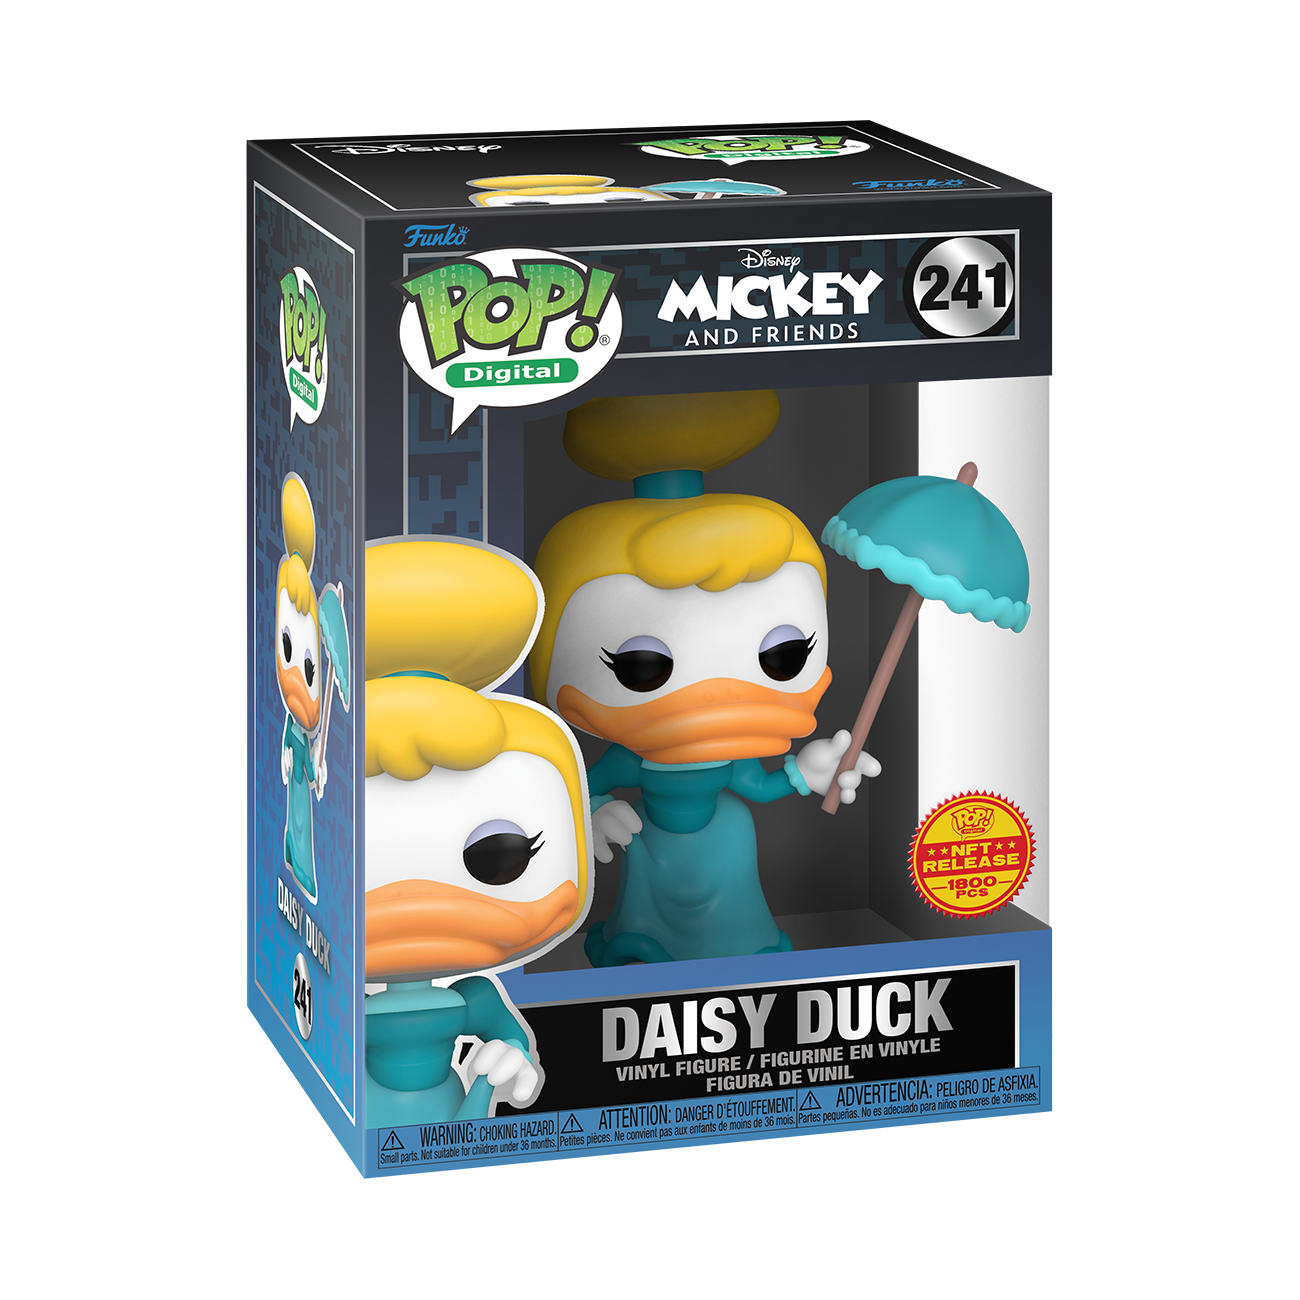 Disney’s Mickey and Friends: Funko Digital Pop! Series 1 Daisy Duck